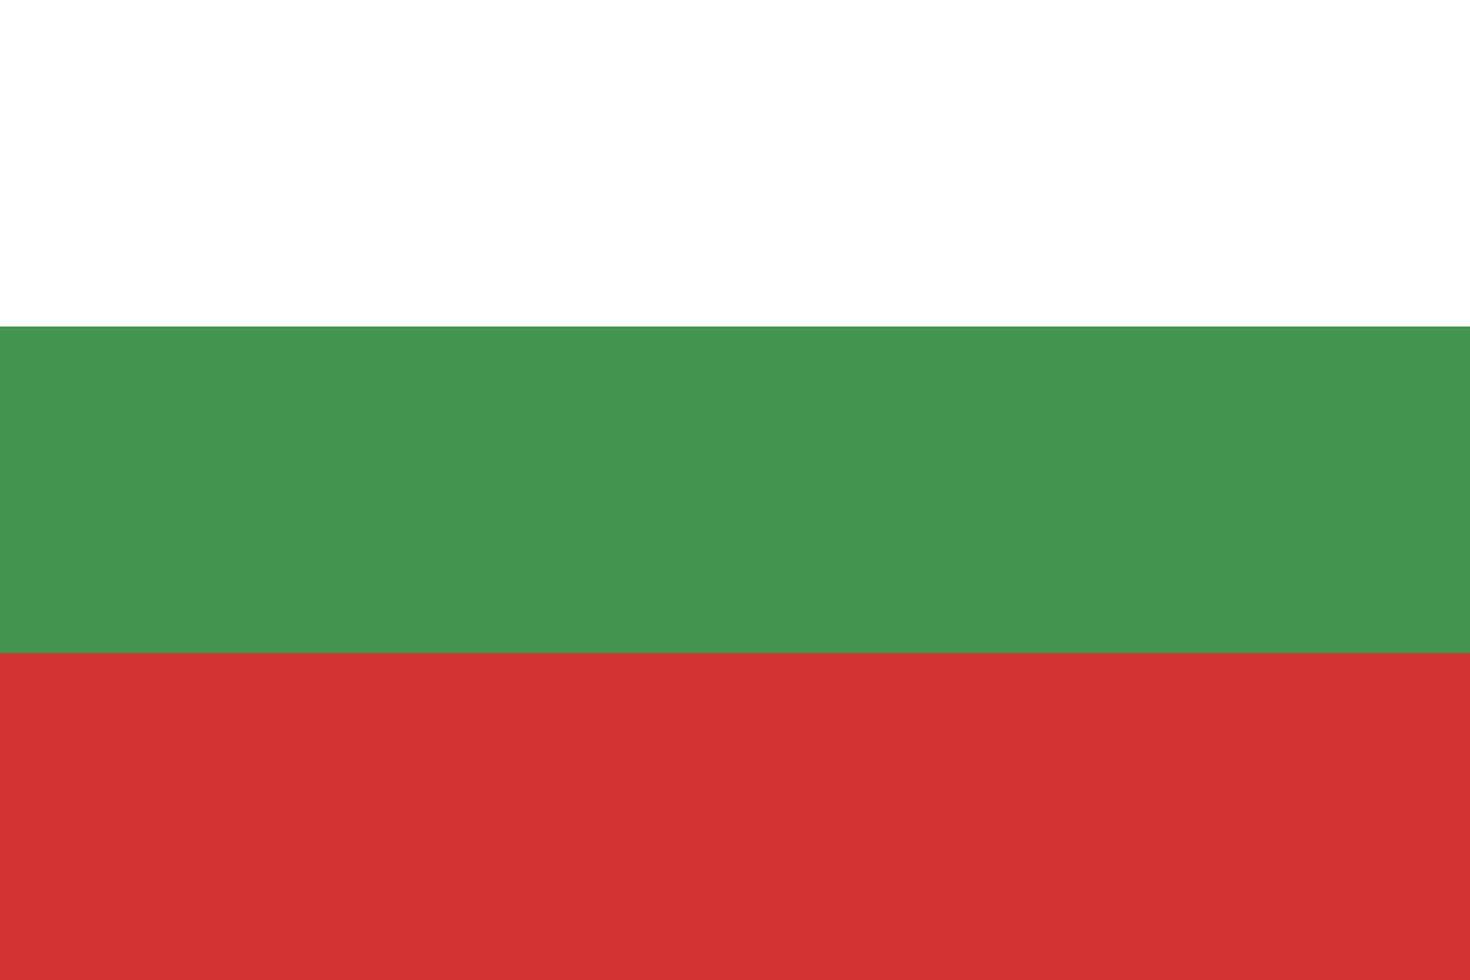 Bulgaria flag national emblem graphic element illustration vector